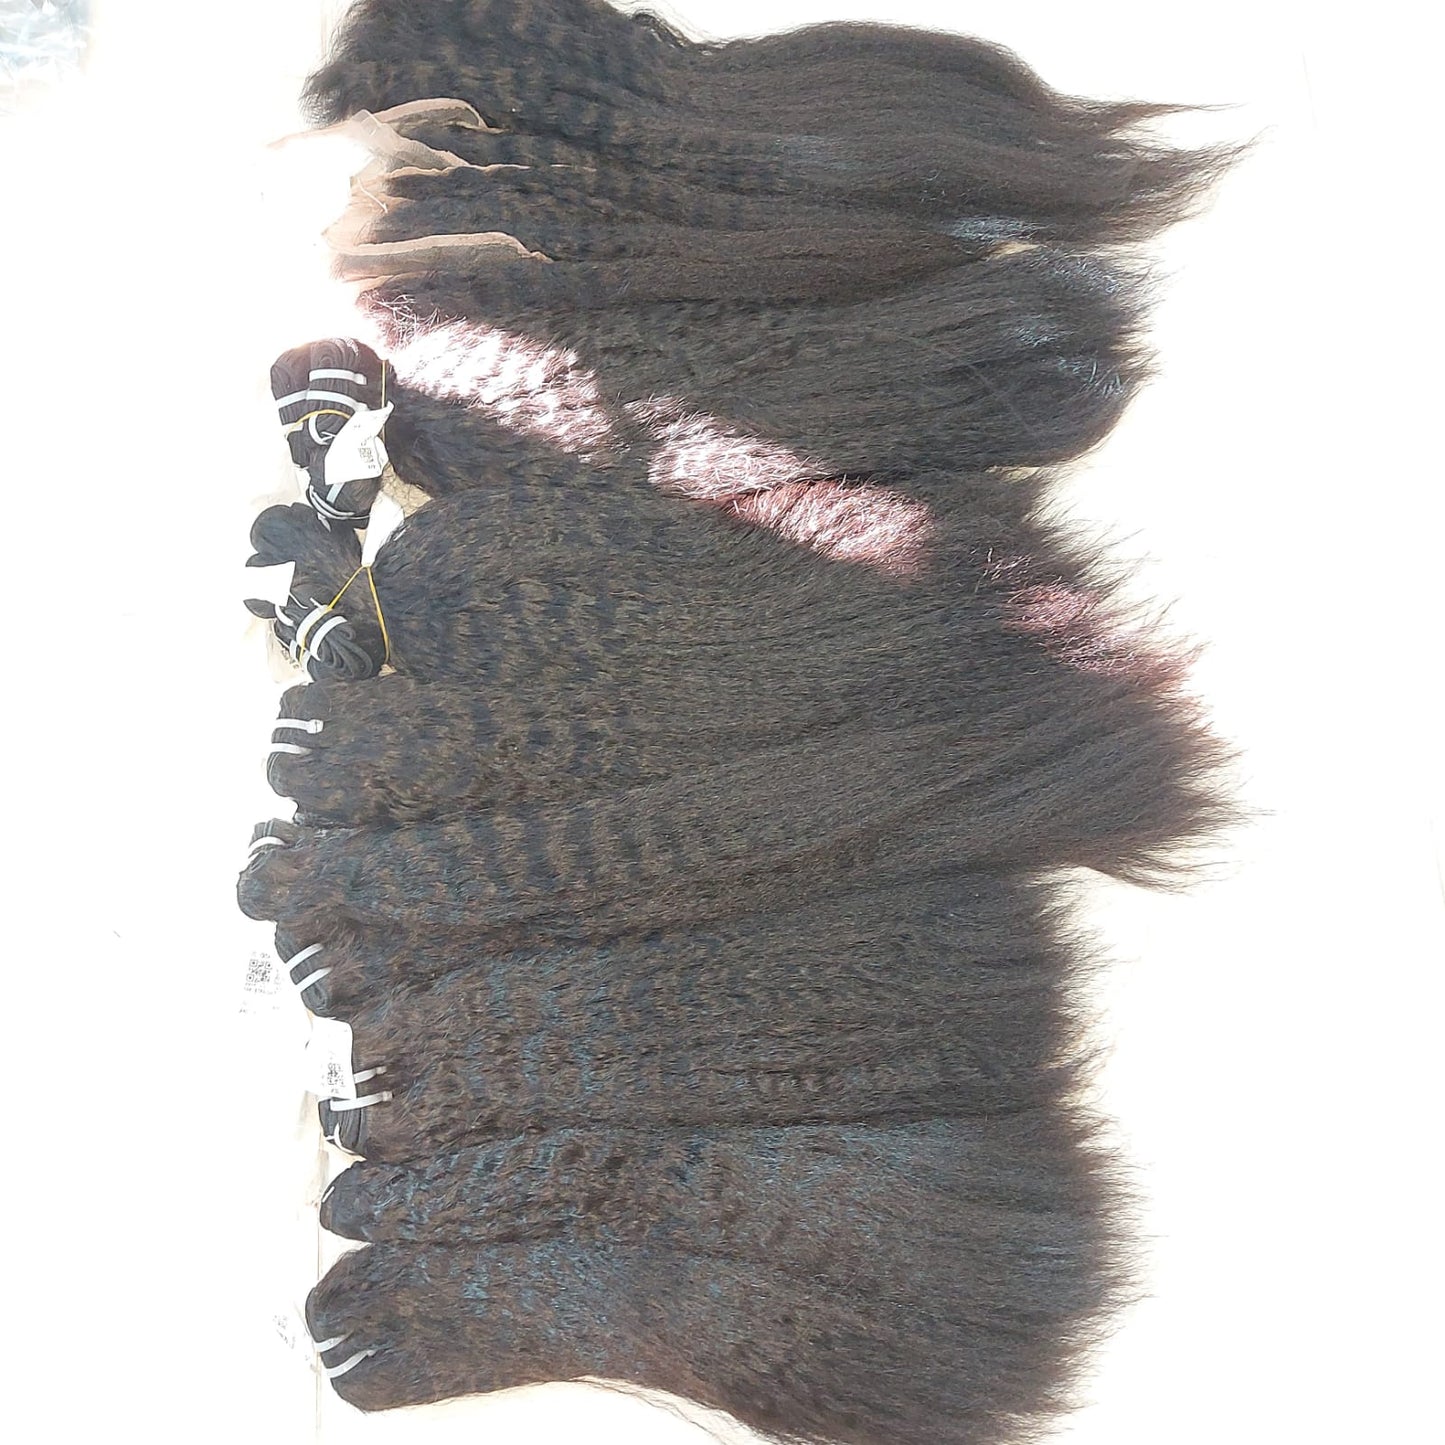 Raw Vietnamese hair, (Yaki  straight Natural) 100g per bundle